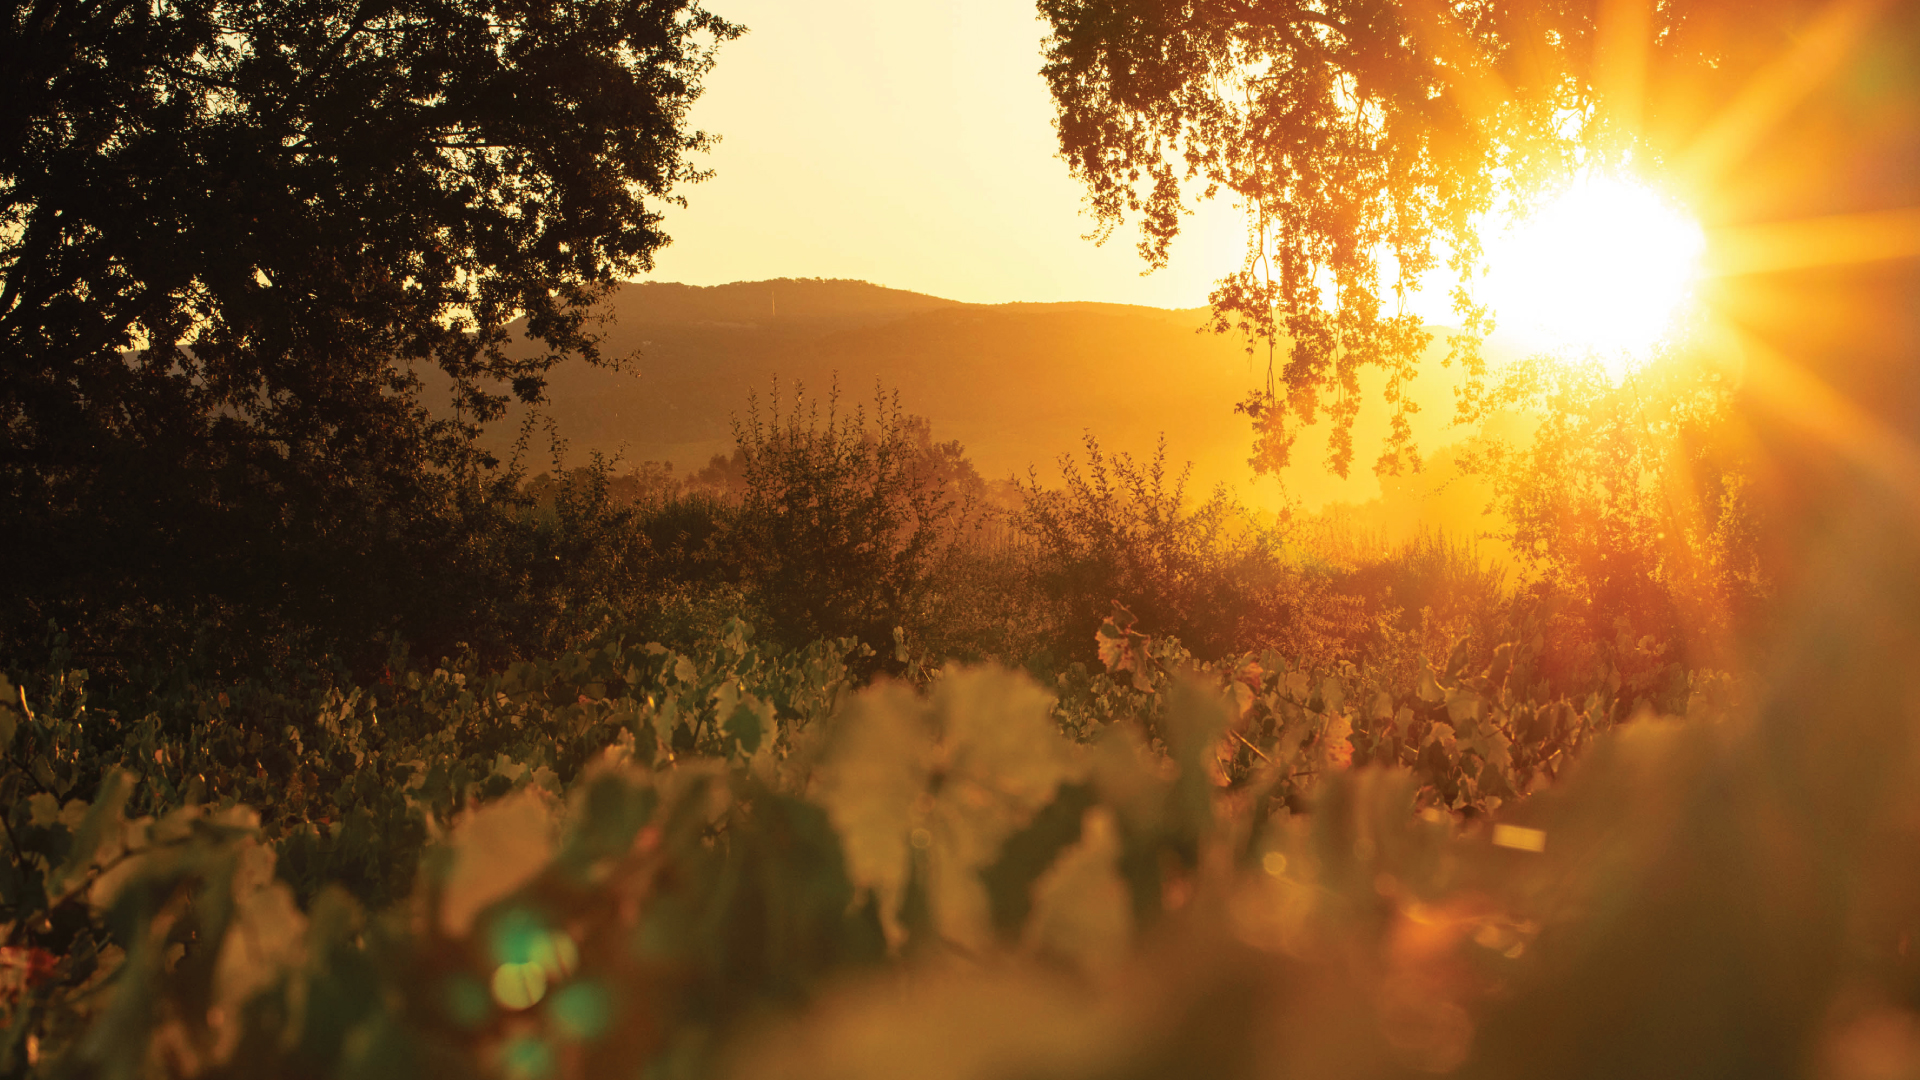 Sun setting over the vineyard.